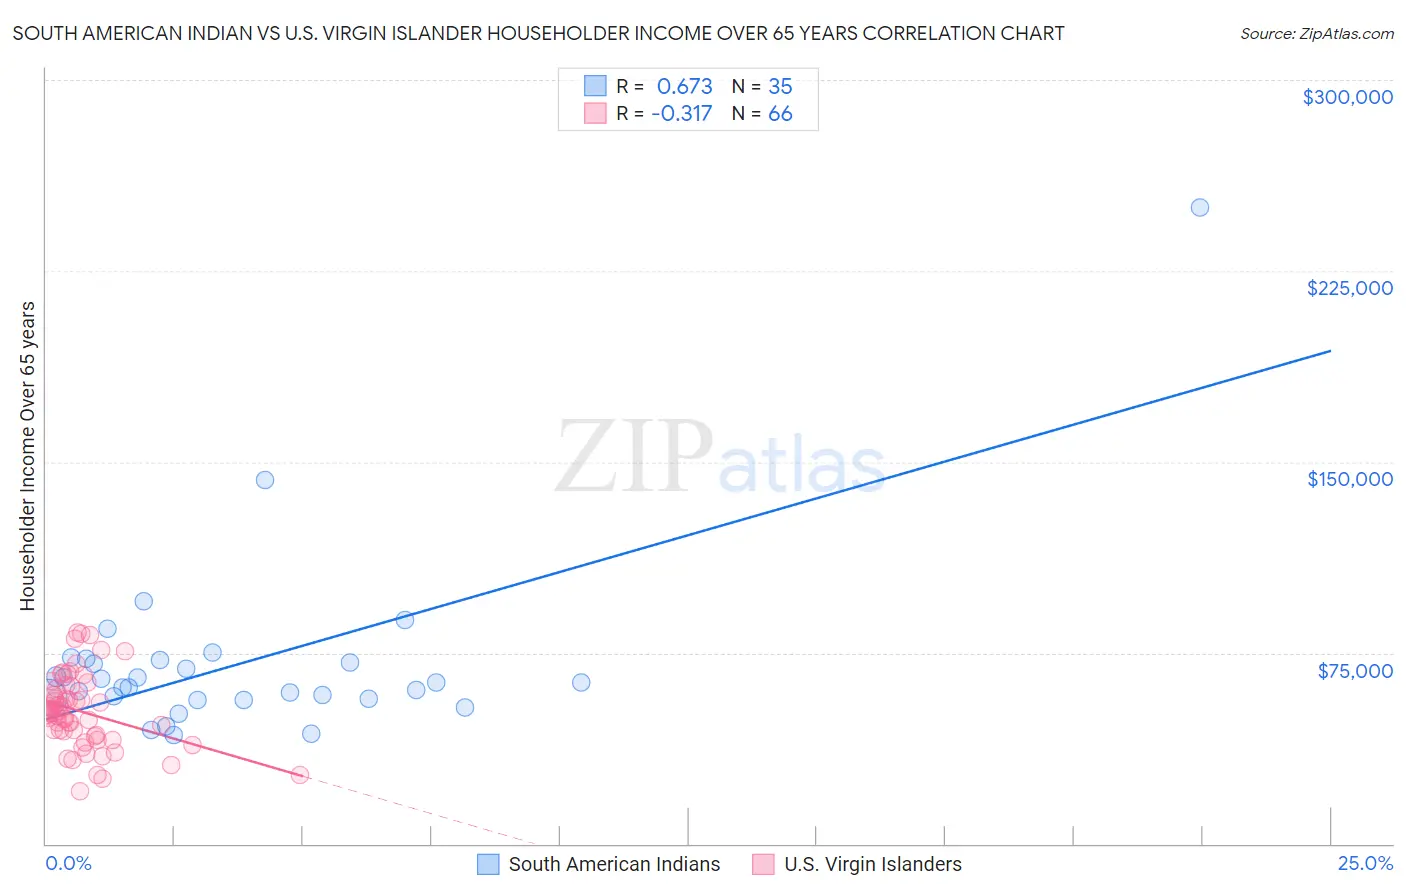 South American Indian vs U.S. Virgin Islander Householder Income Over 65 years